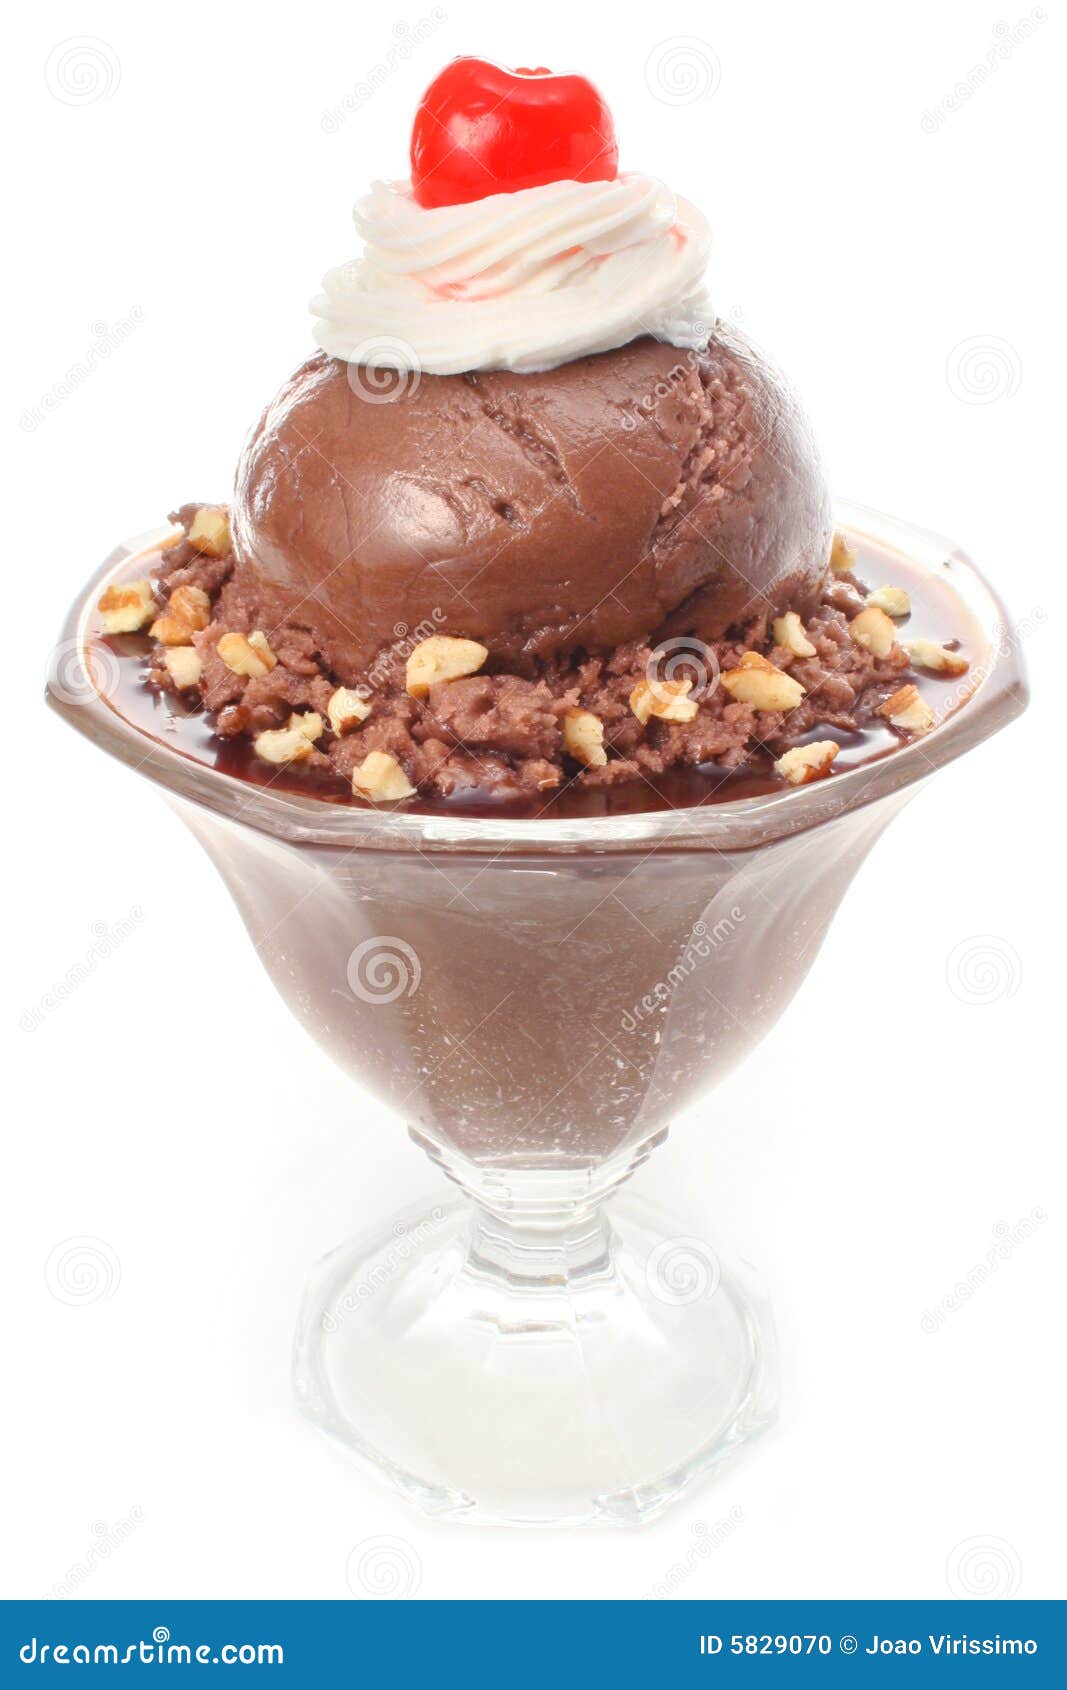 chocolate ice cream sundae dessert